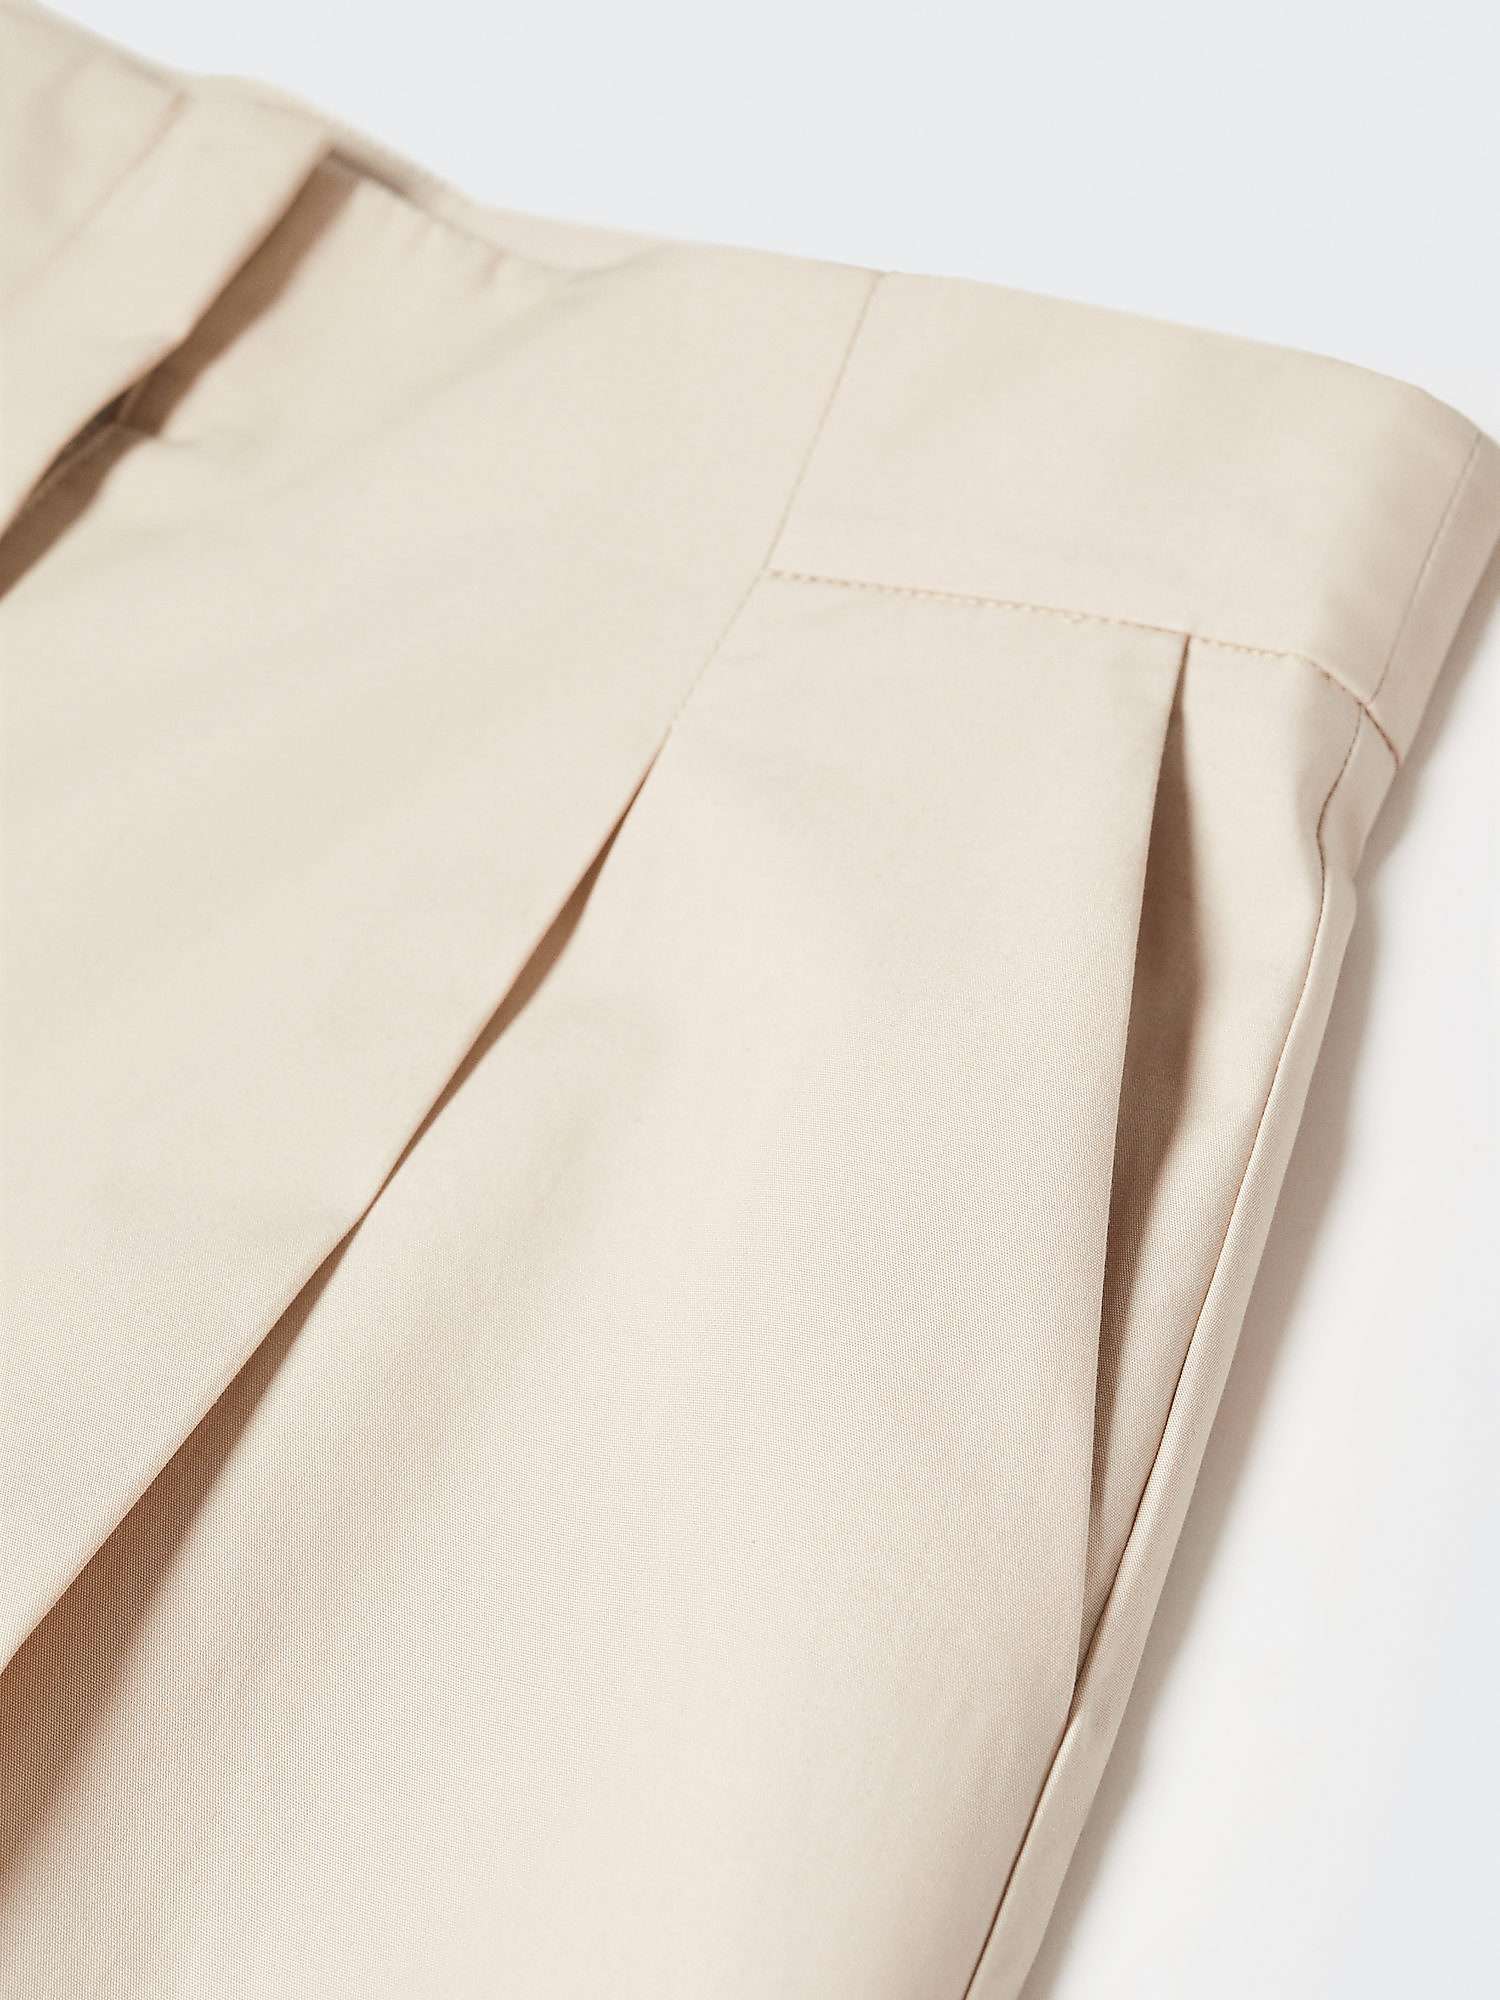 Mango Pope Plain Tailored Trousers, Light Beige at John Lewis & Partners